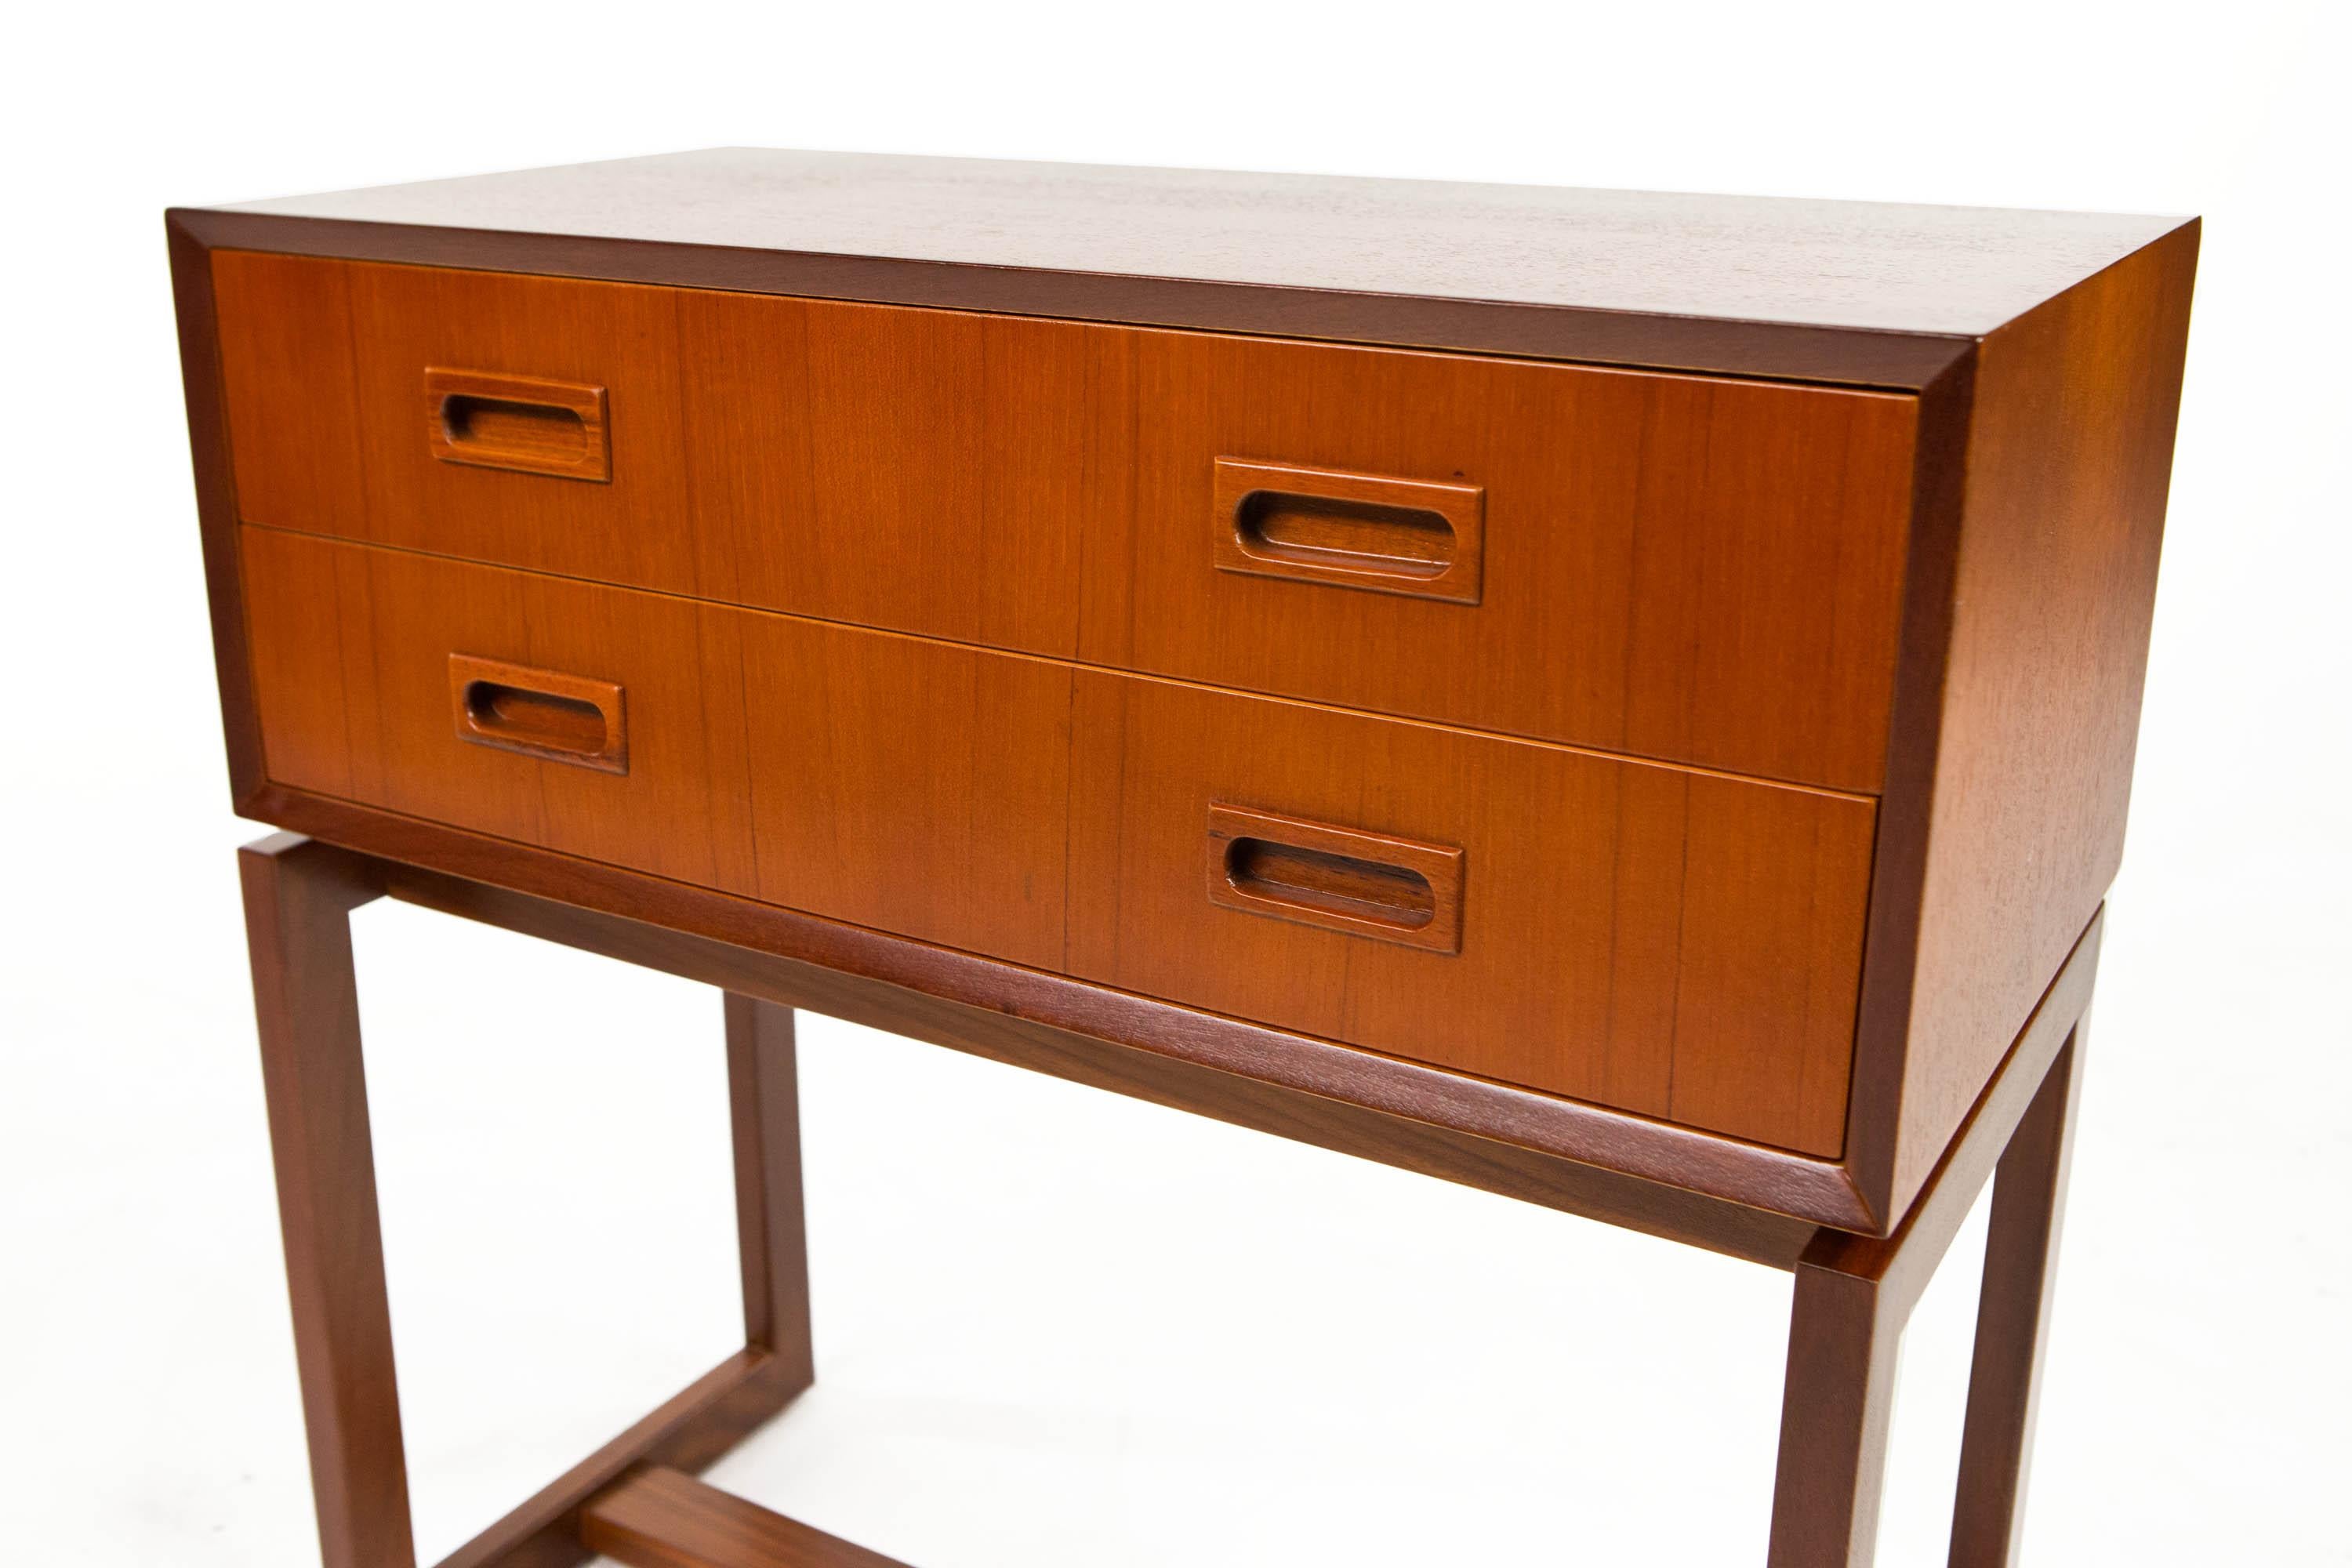 Teak Two Drawer Bureau with Beveled Edge, Danish Design 1950's For Sale 1